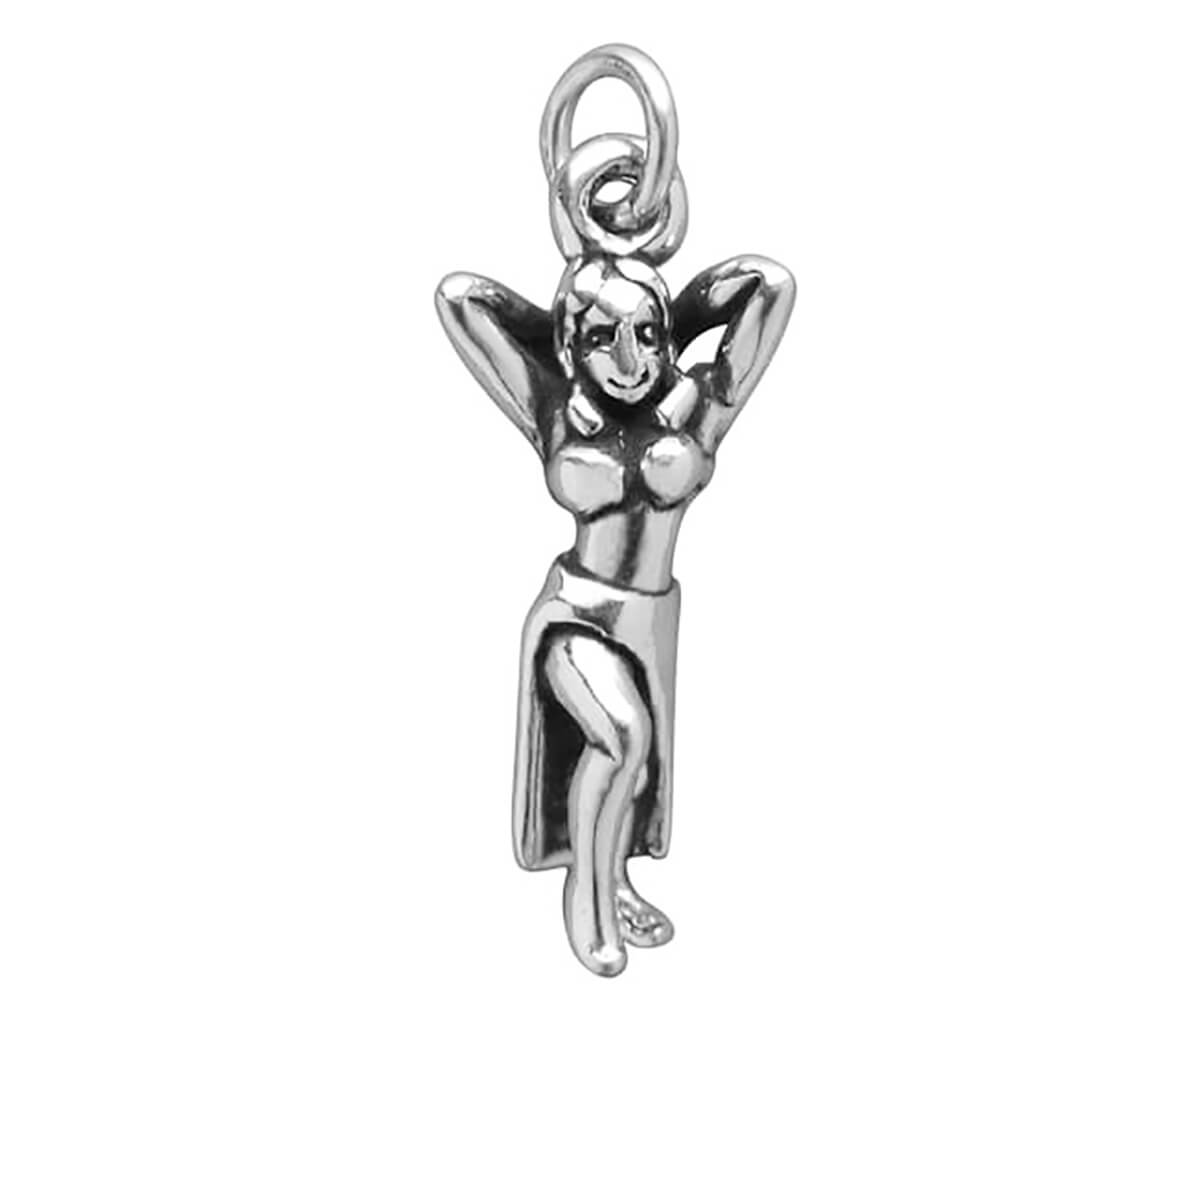 belly dancer charm sterling silver pendant